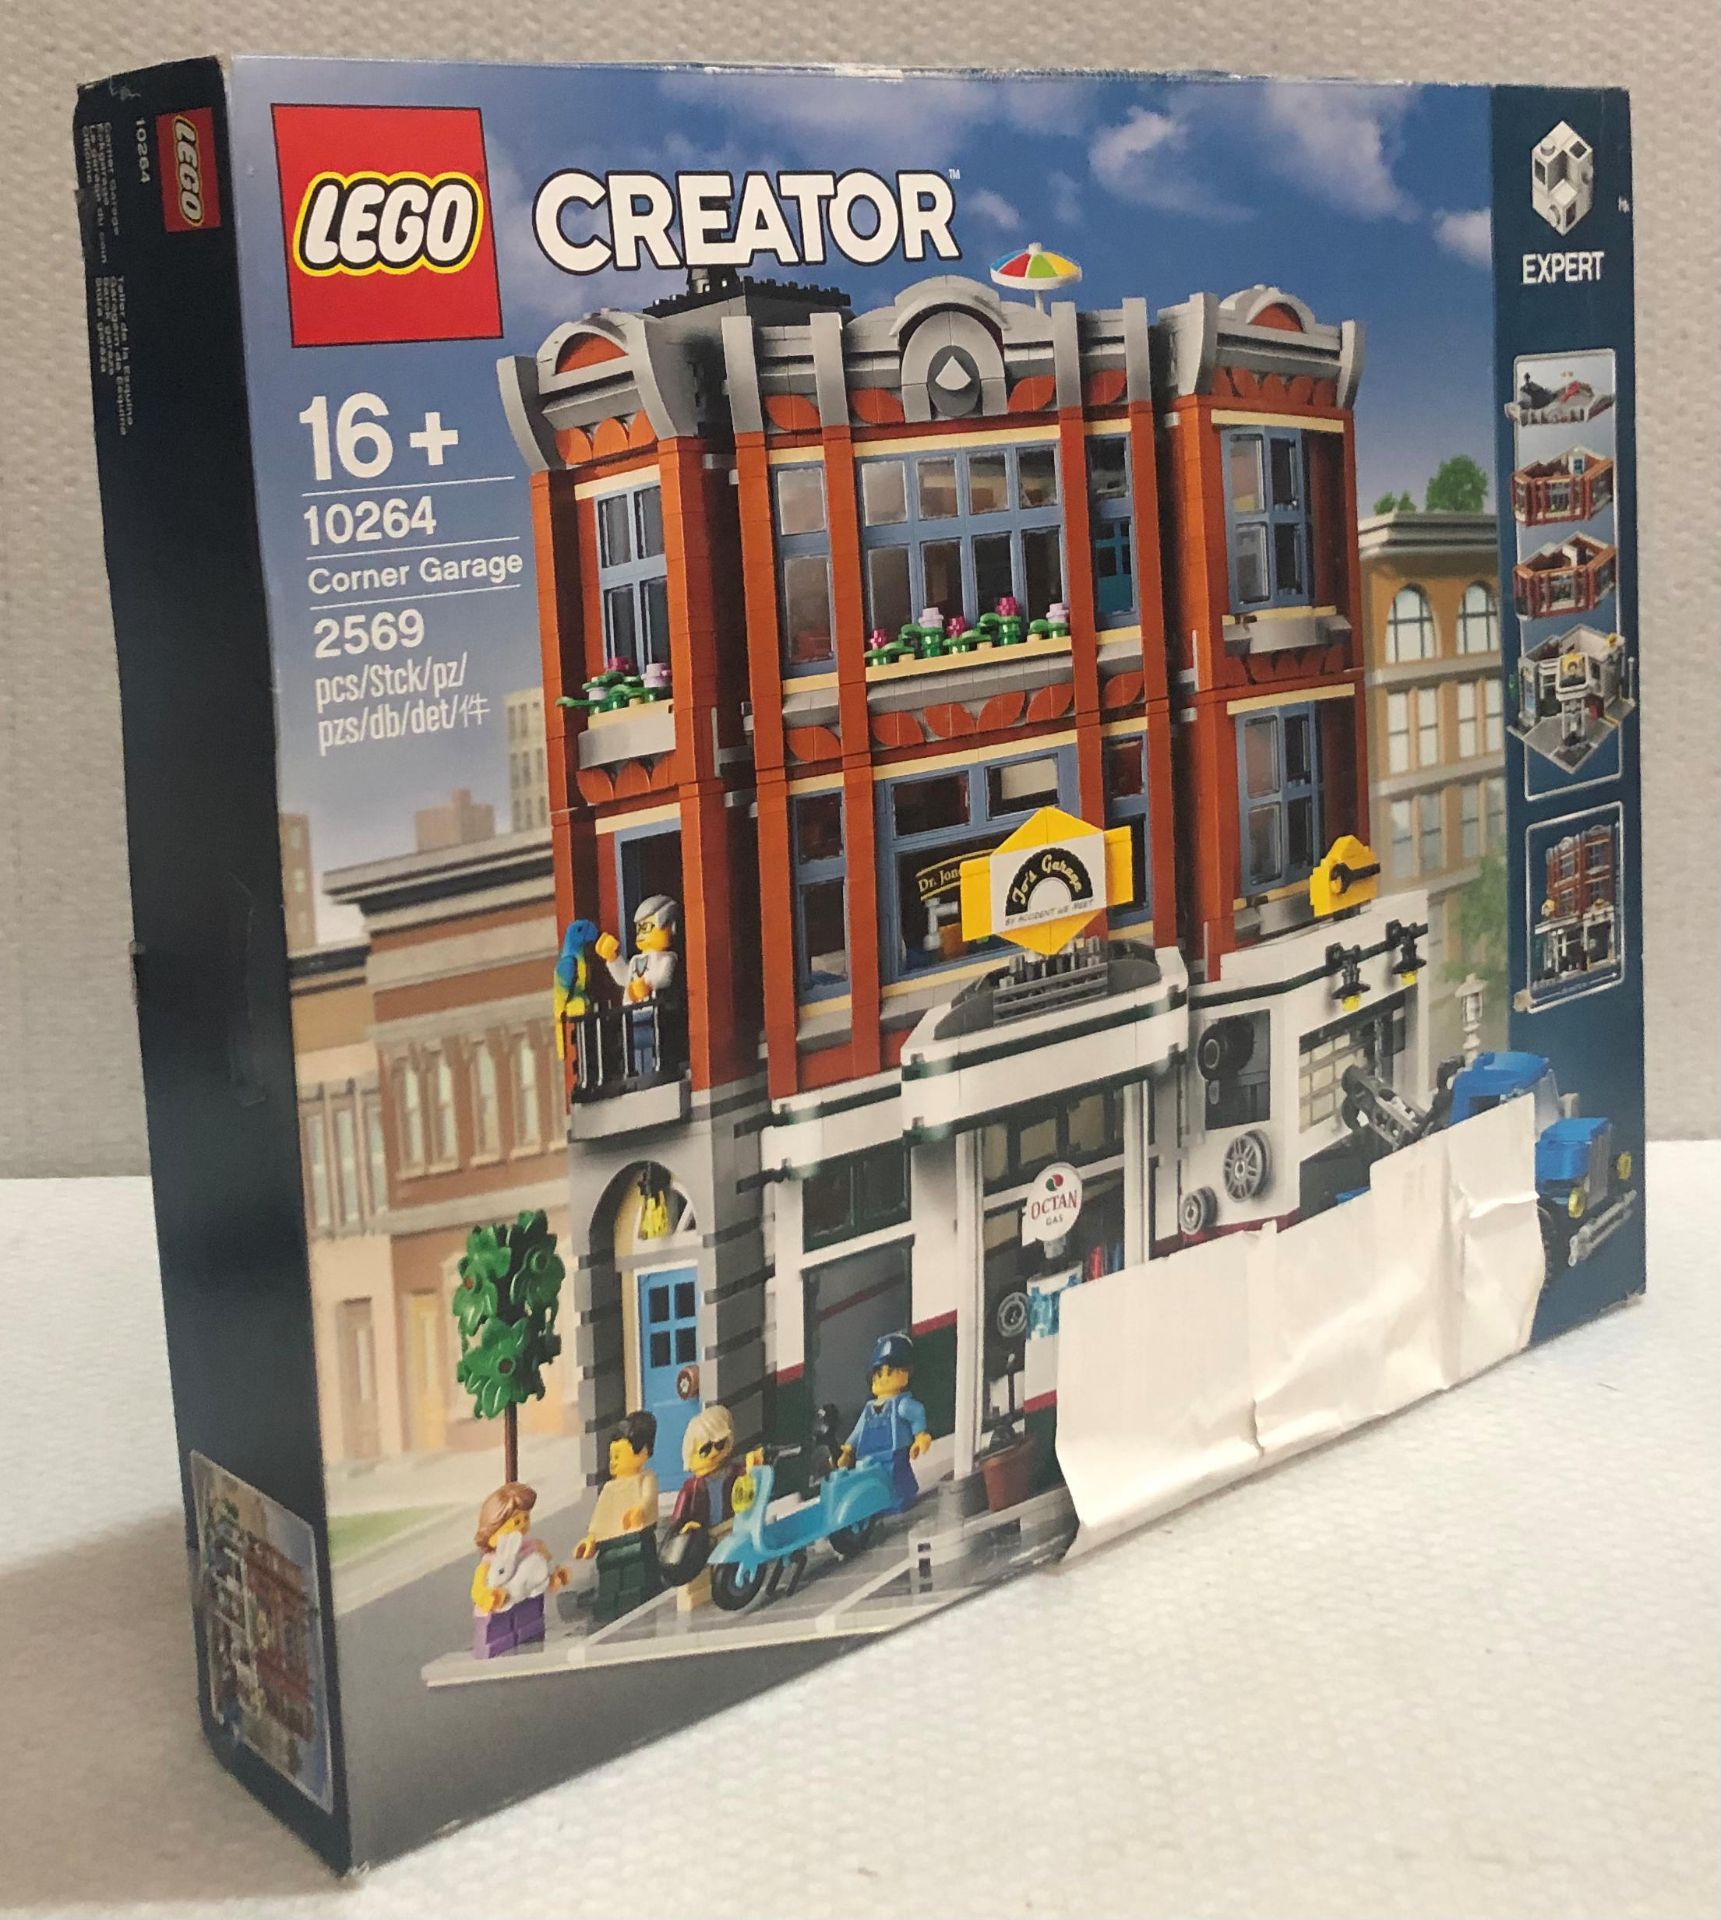 1 x Lego Creator Expert Corner Garage - Model 10264 - New/Boxed - Image 3 of 6